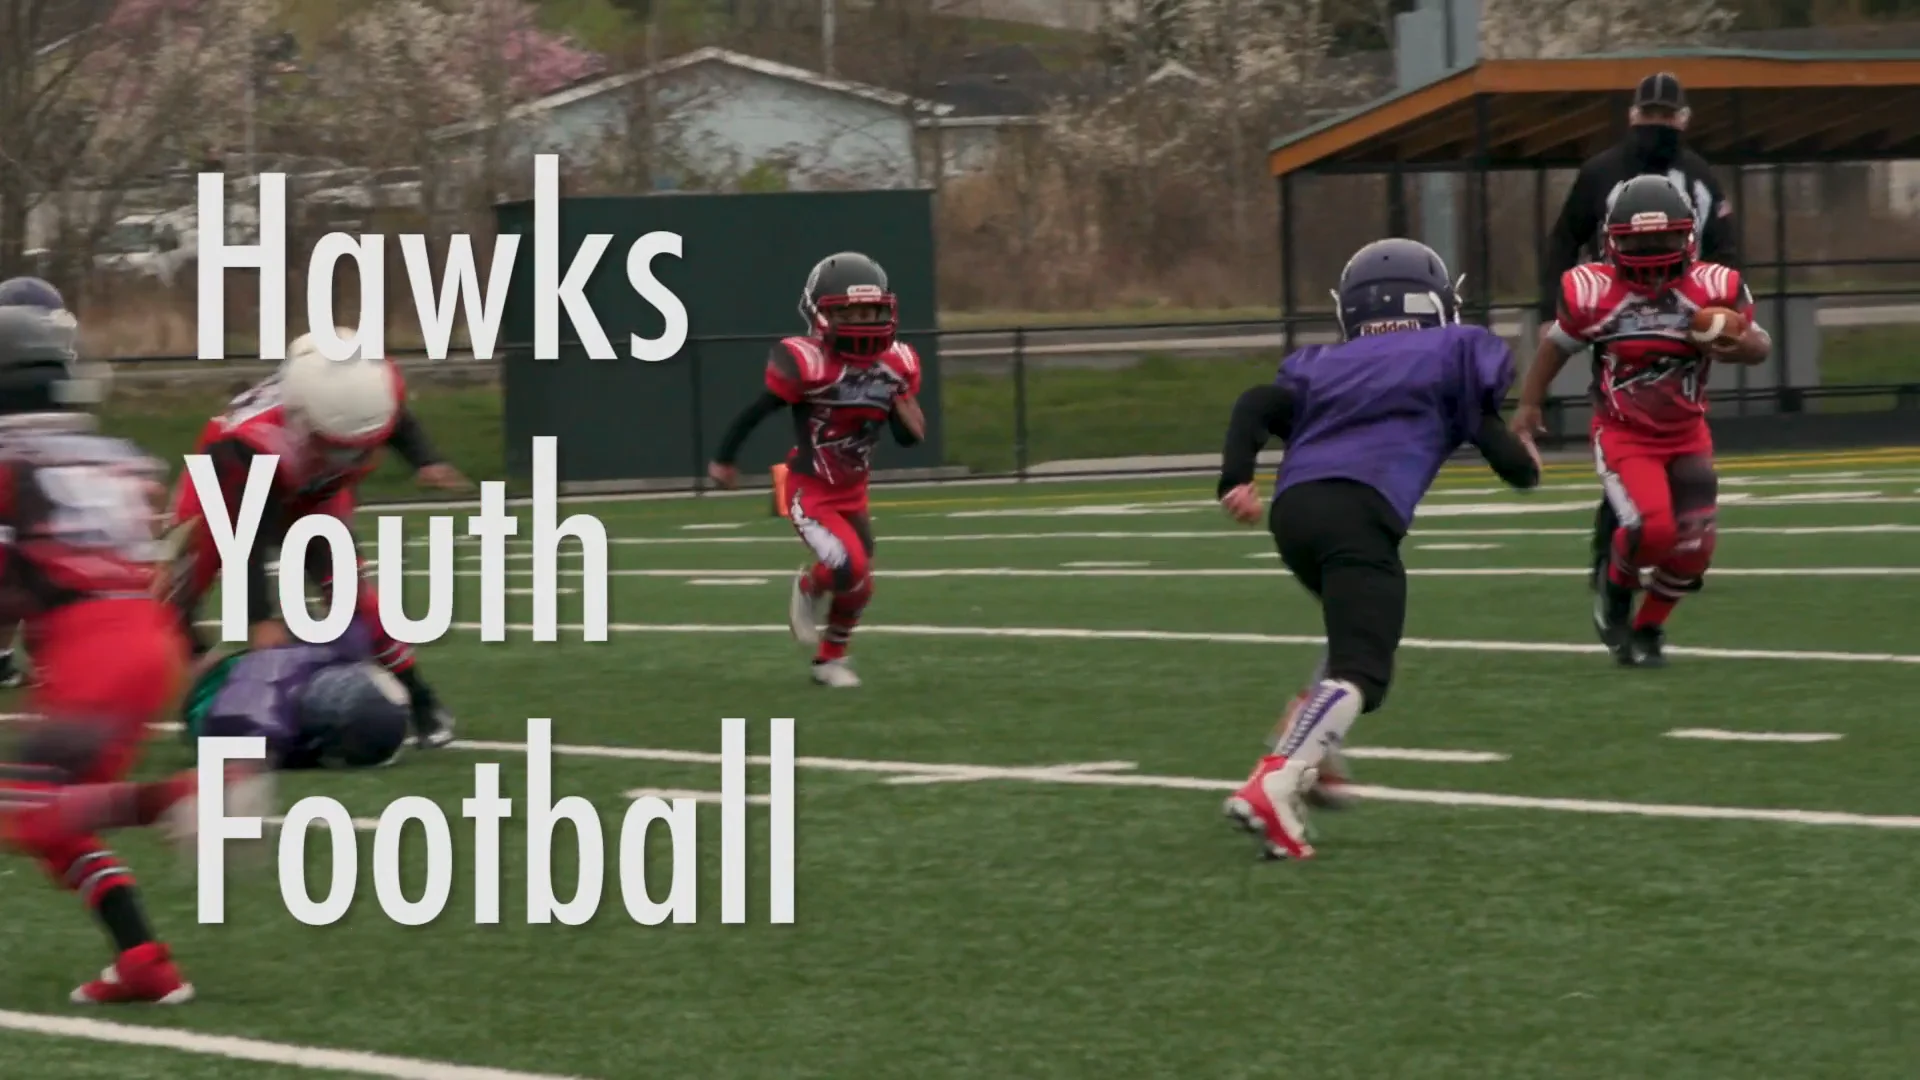 Hawks Youth Sports